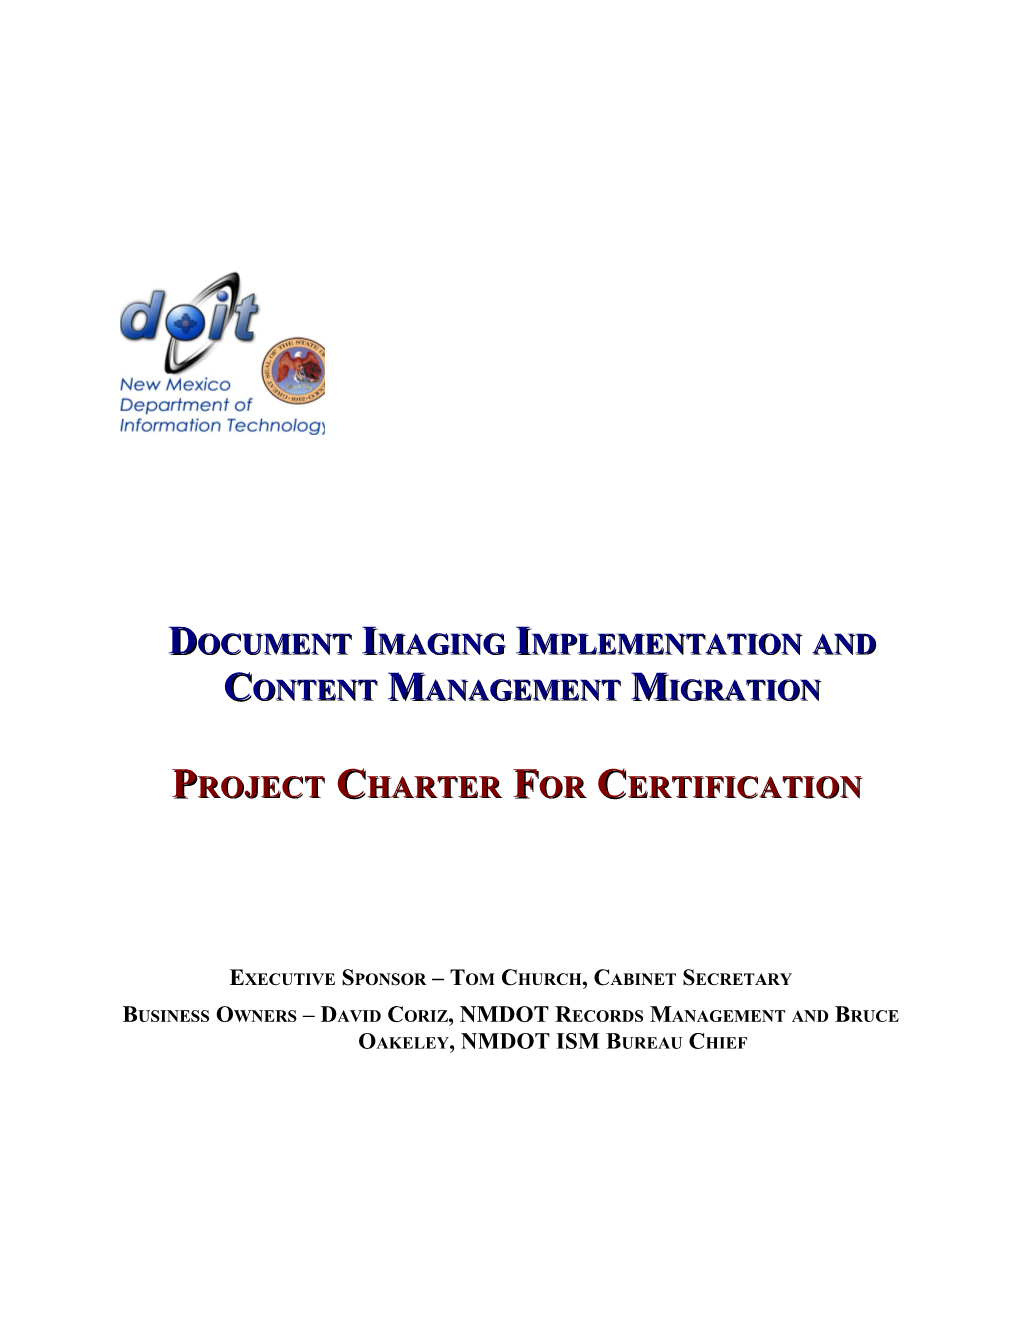 Document Imaging Implementation and Content Management Migration